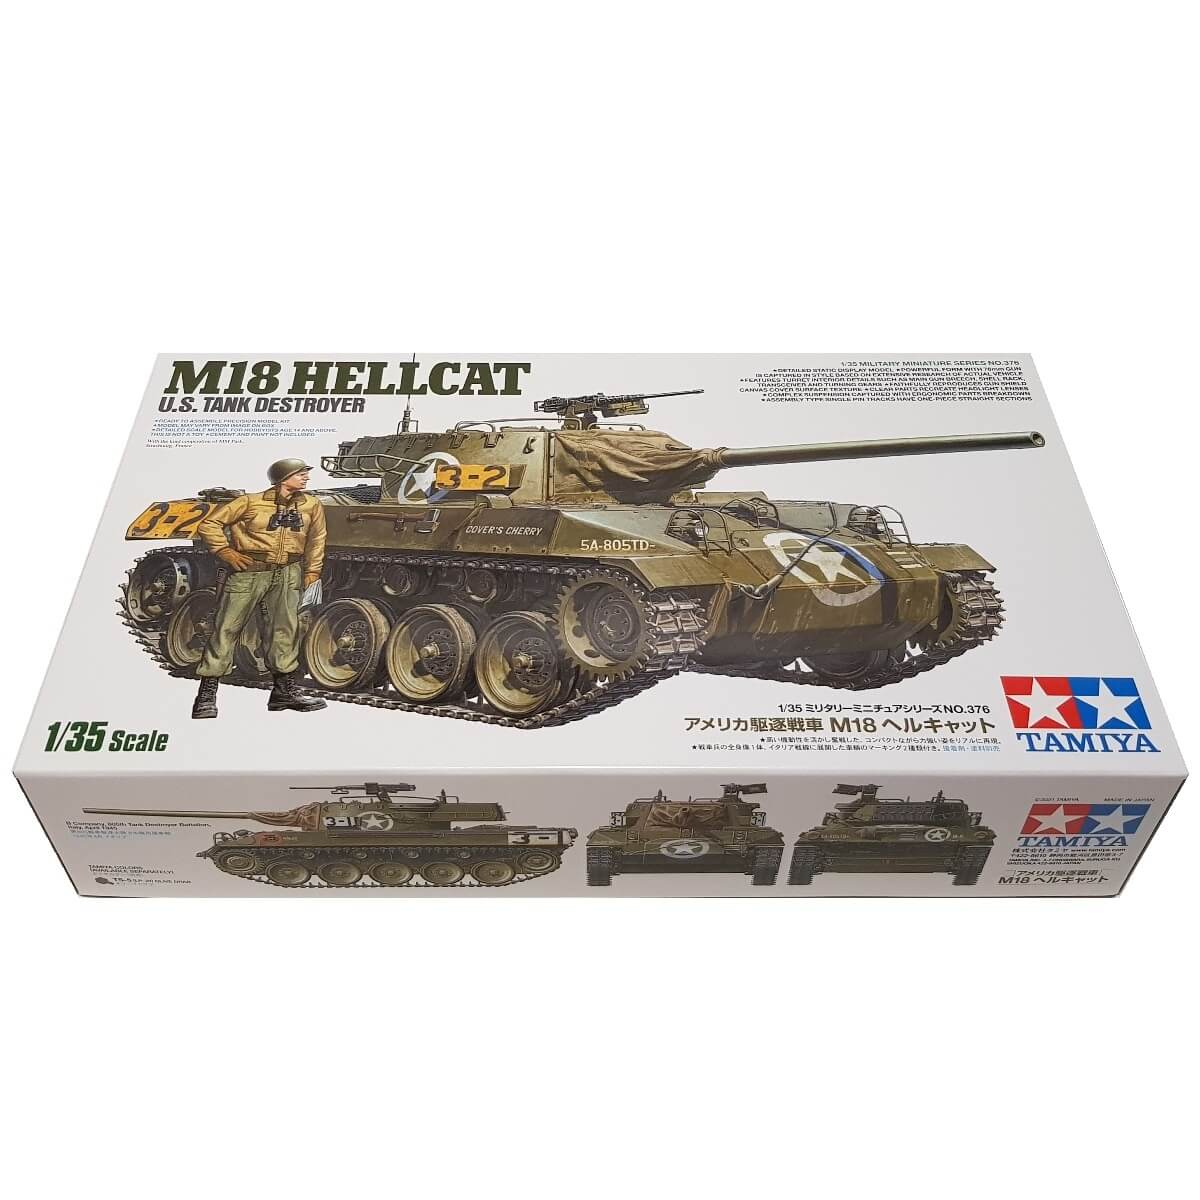 US Tank Destroyer M18 Hellcat 1:35 Plastic Model Kit TAMIYA